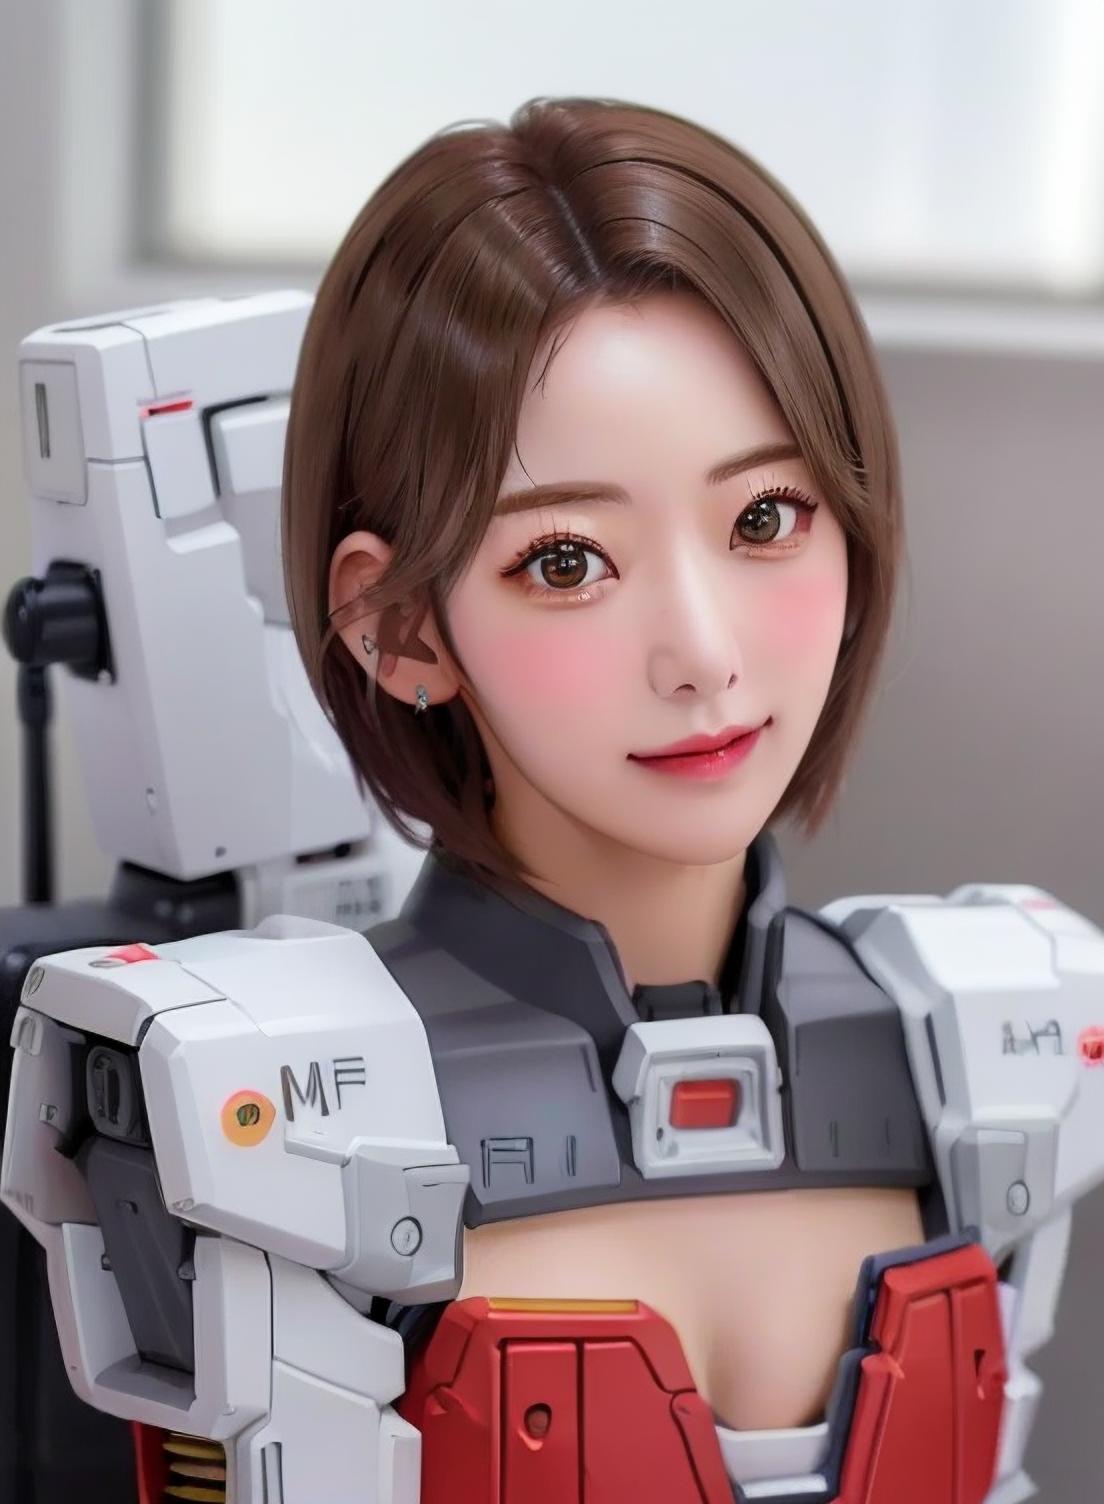 AI model image by crchen_tw